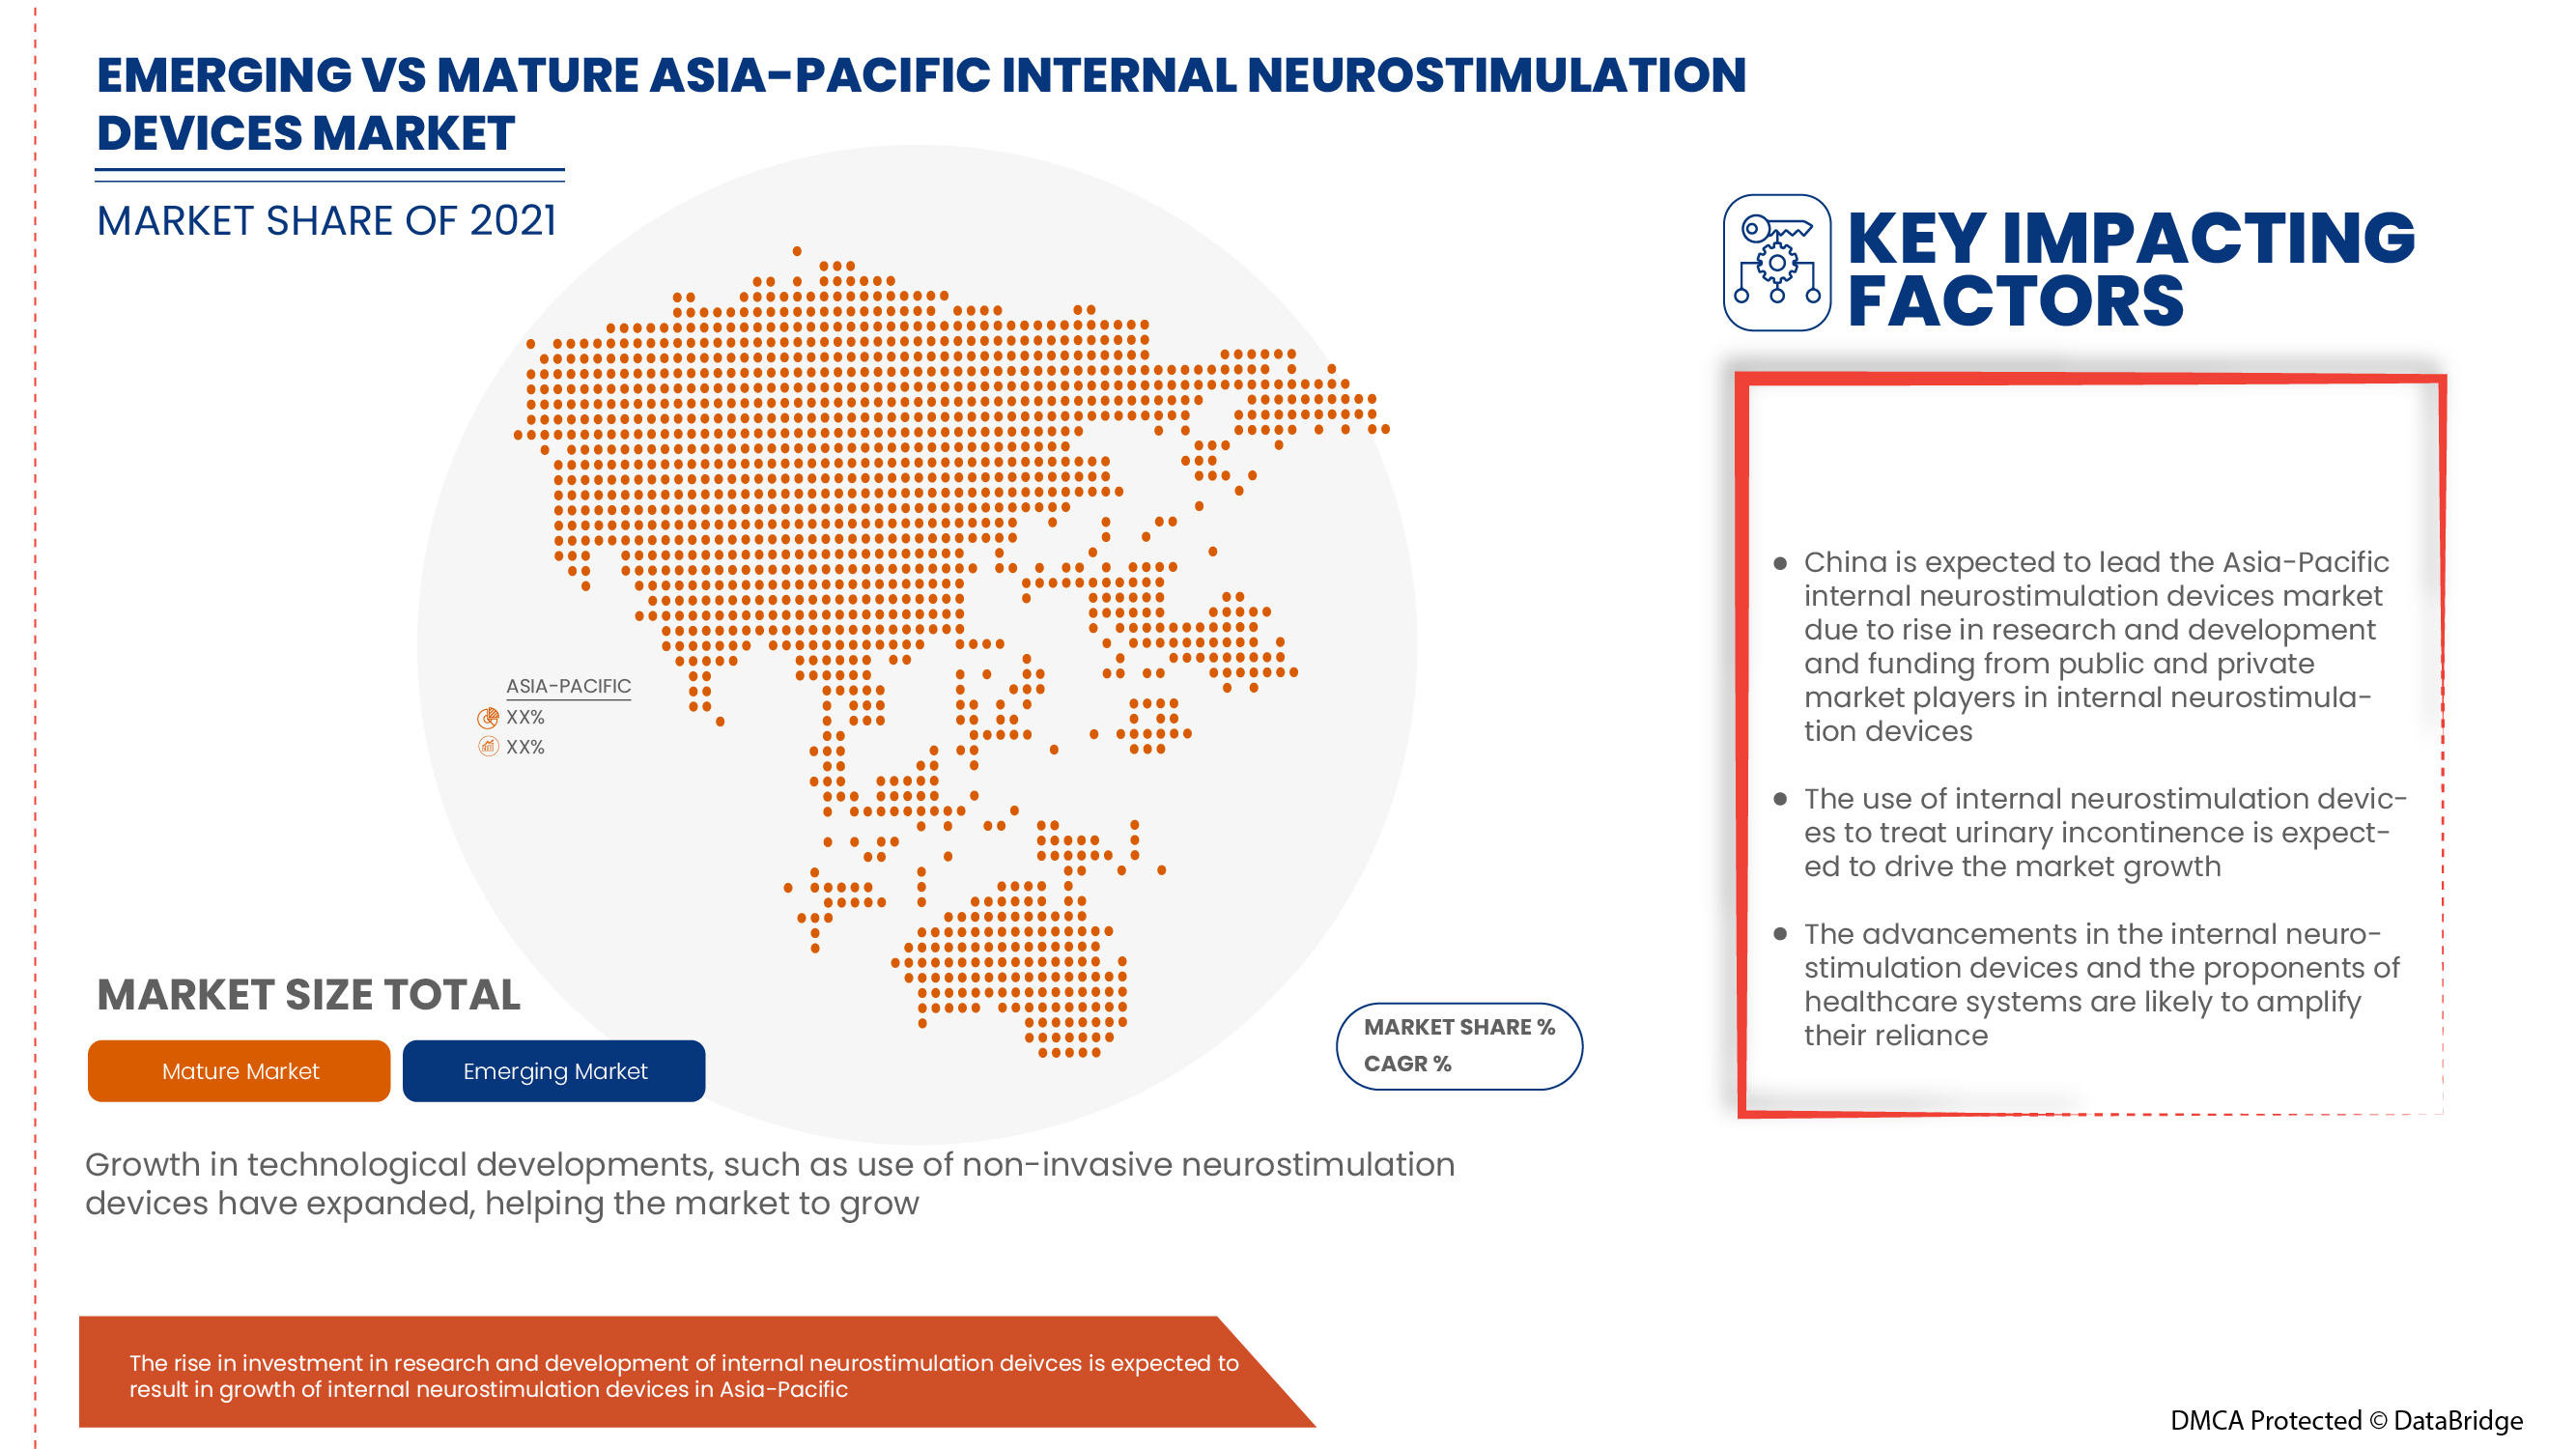 Asia-Pacific Internal Neurostimulation Devices Market